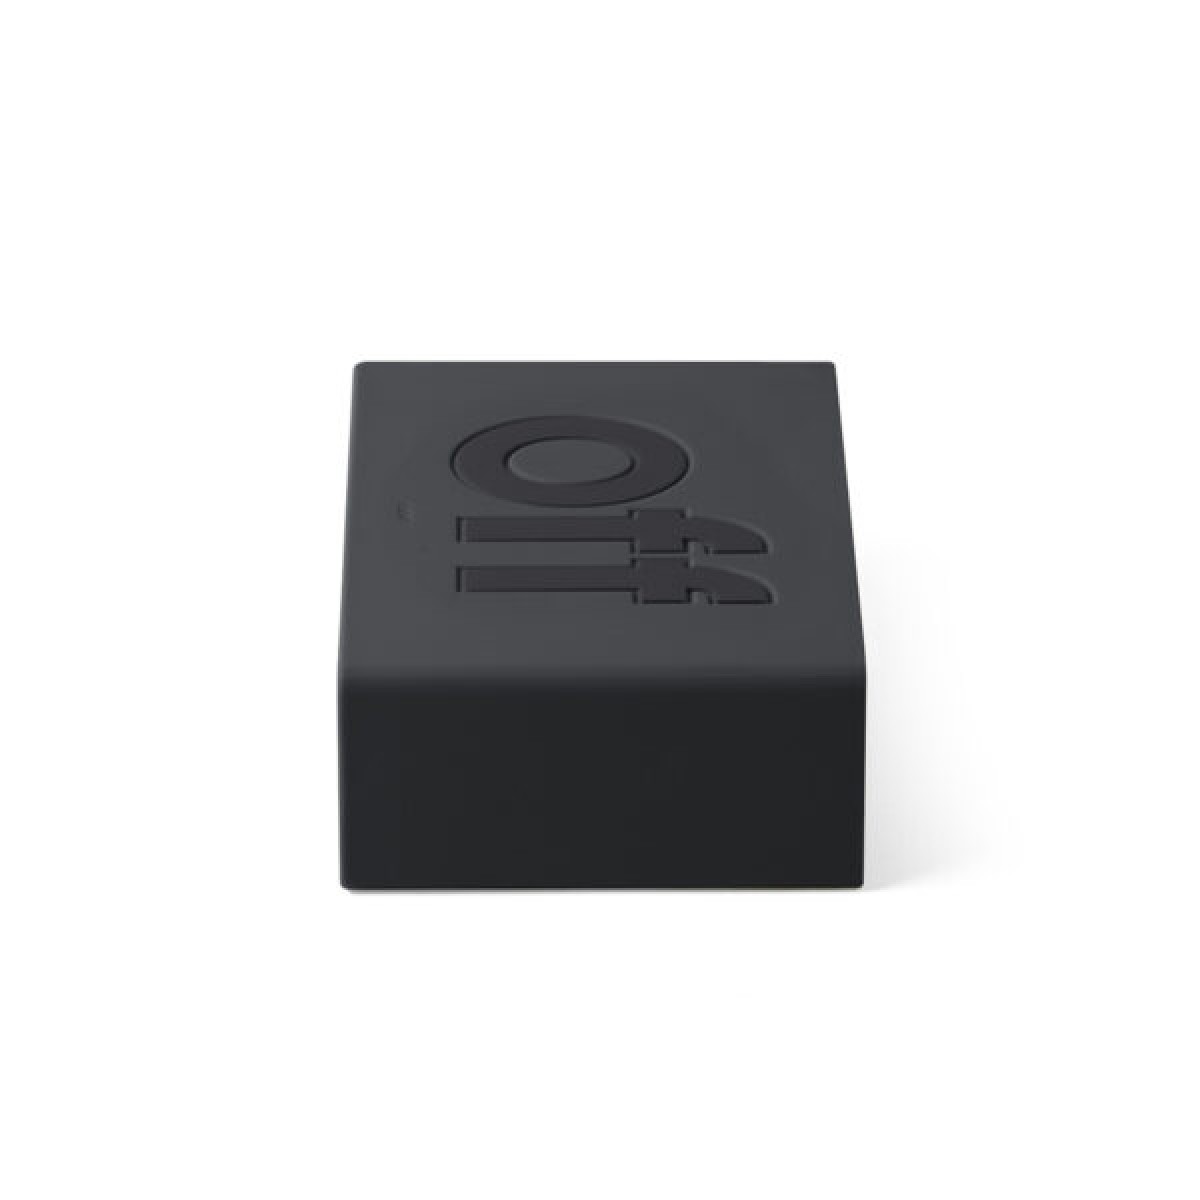 Lexon - Flip - Reversible LCD alarm clock - Black